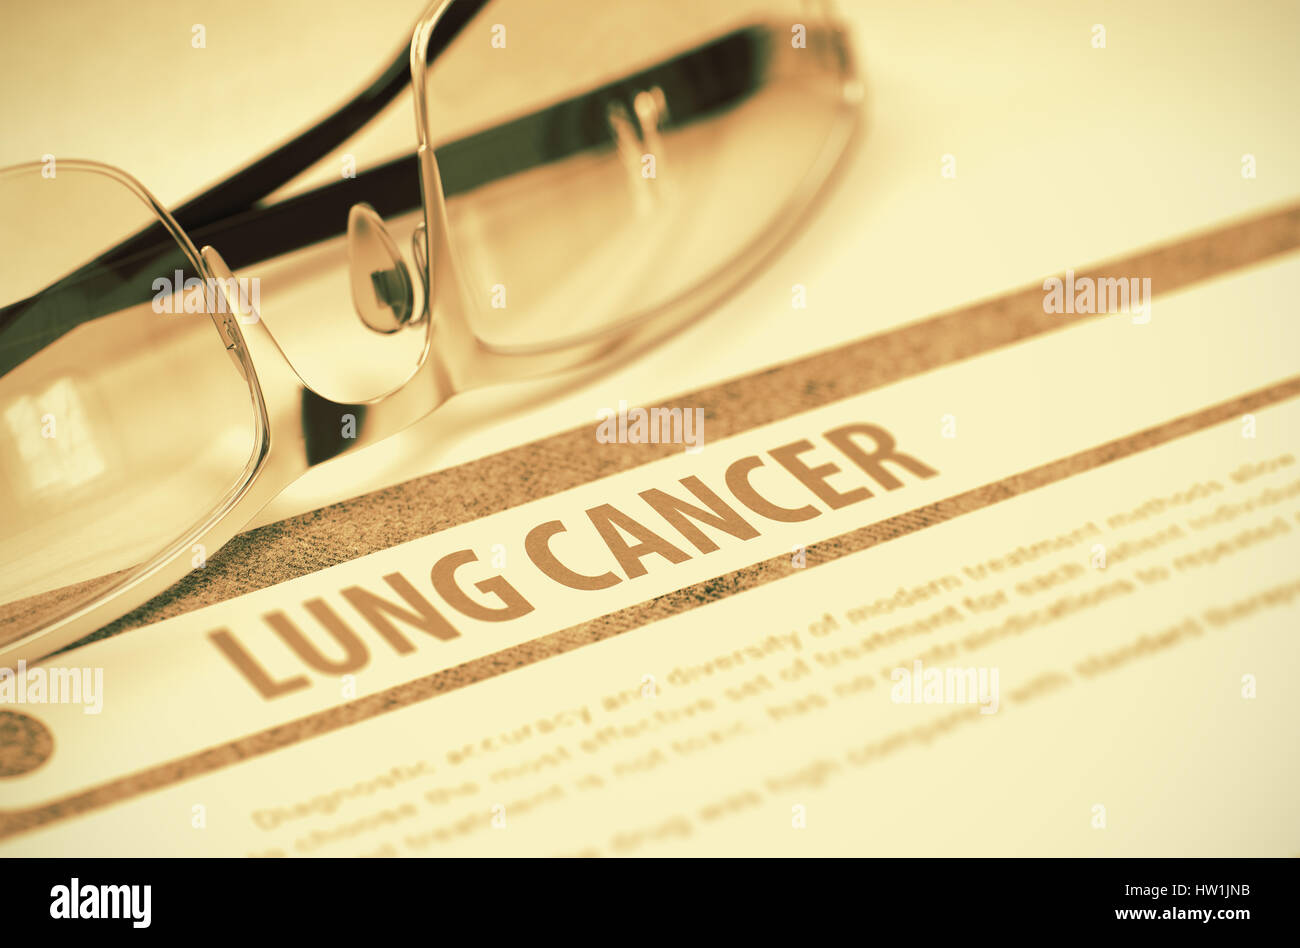 Diagnosis - Lung Cancer. Medicine Concept. 3D Illustration. Stock Photo